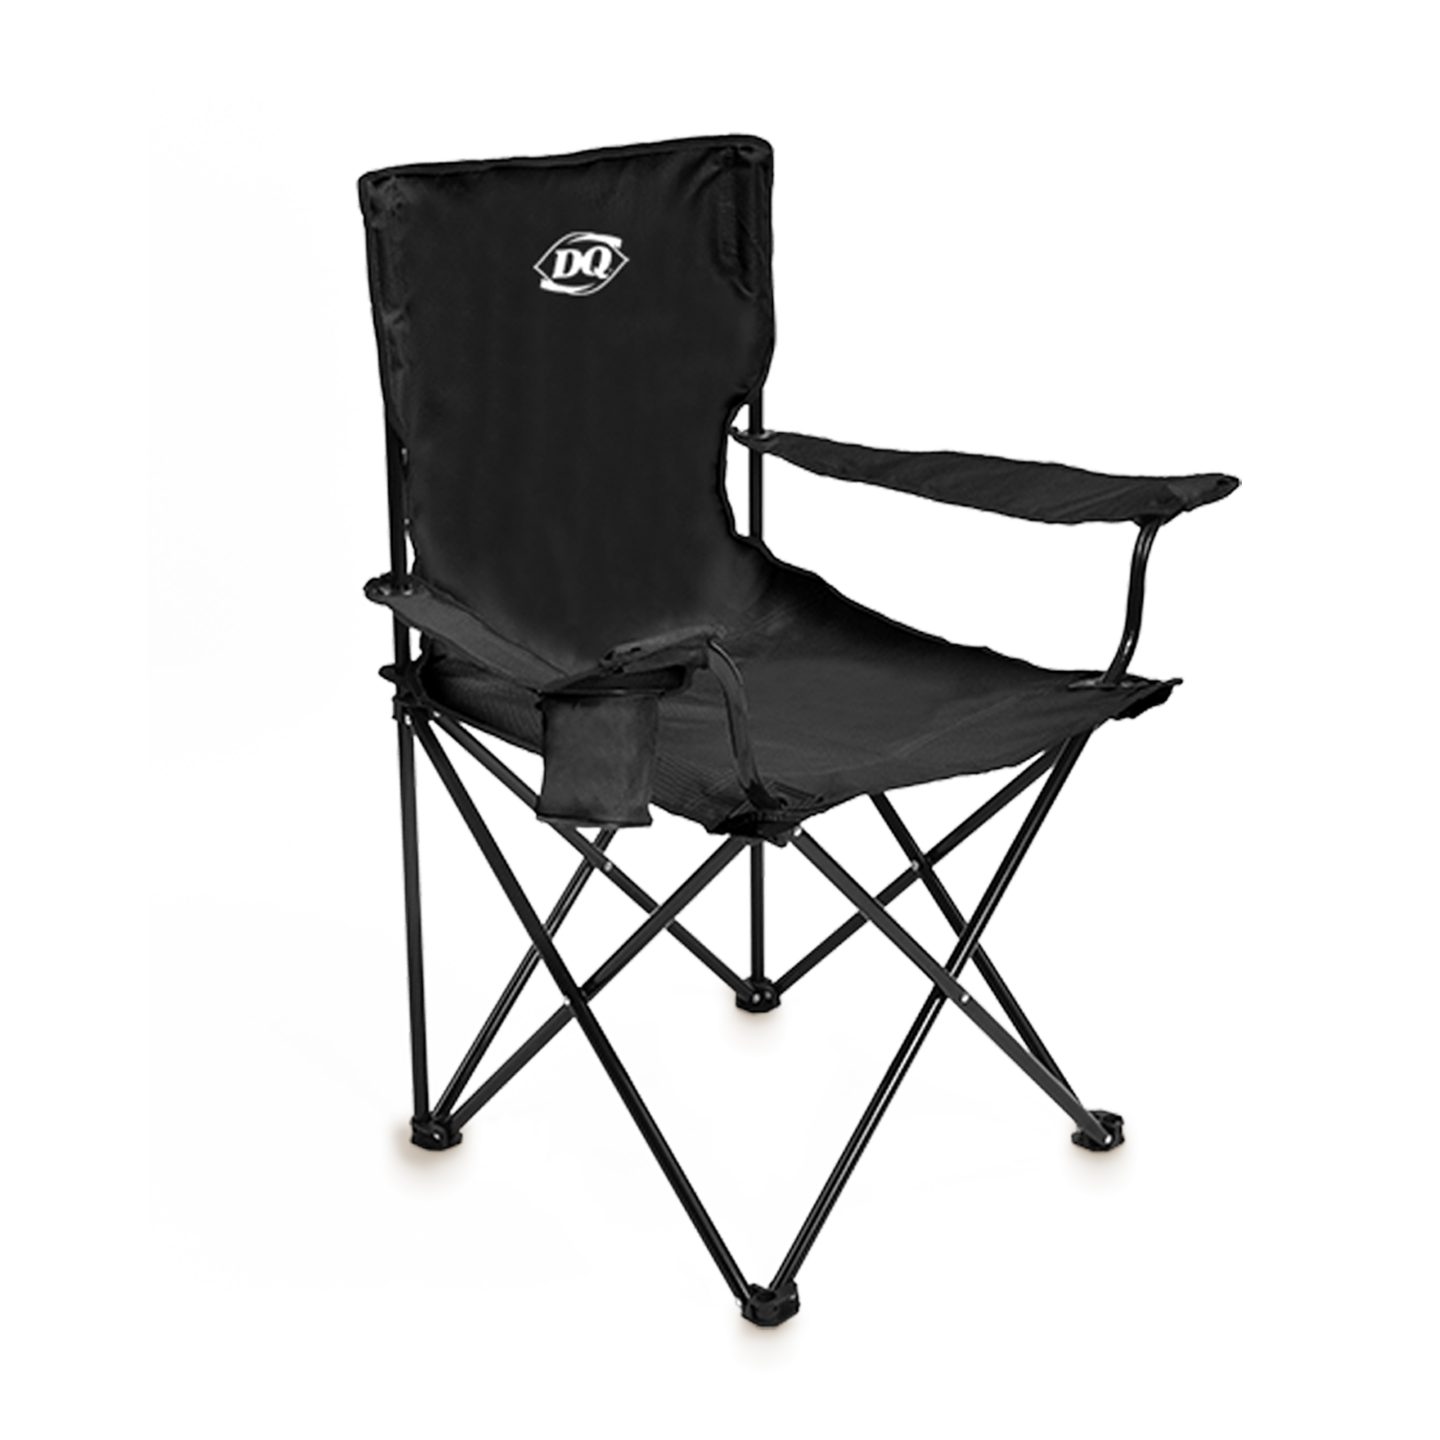 DQ Camp Chair